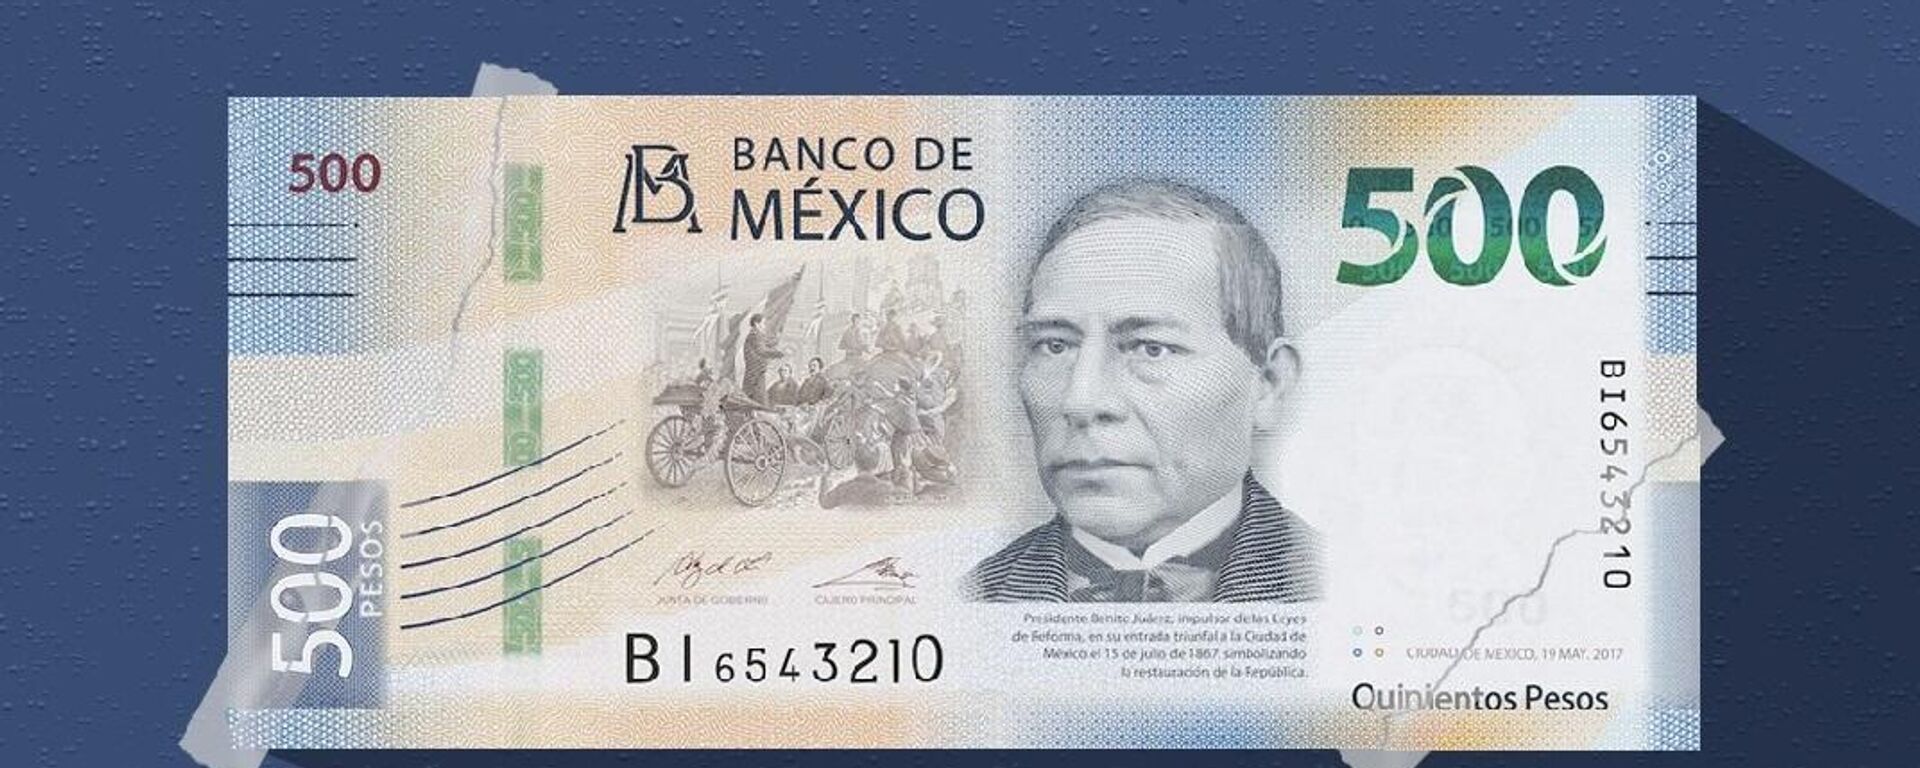 Peso mexicano. - Sputnik Mundo, 1920, 26.11.2021